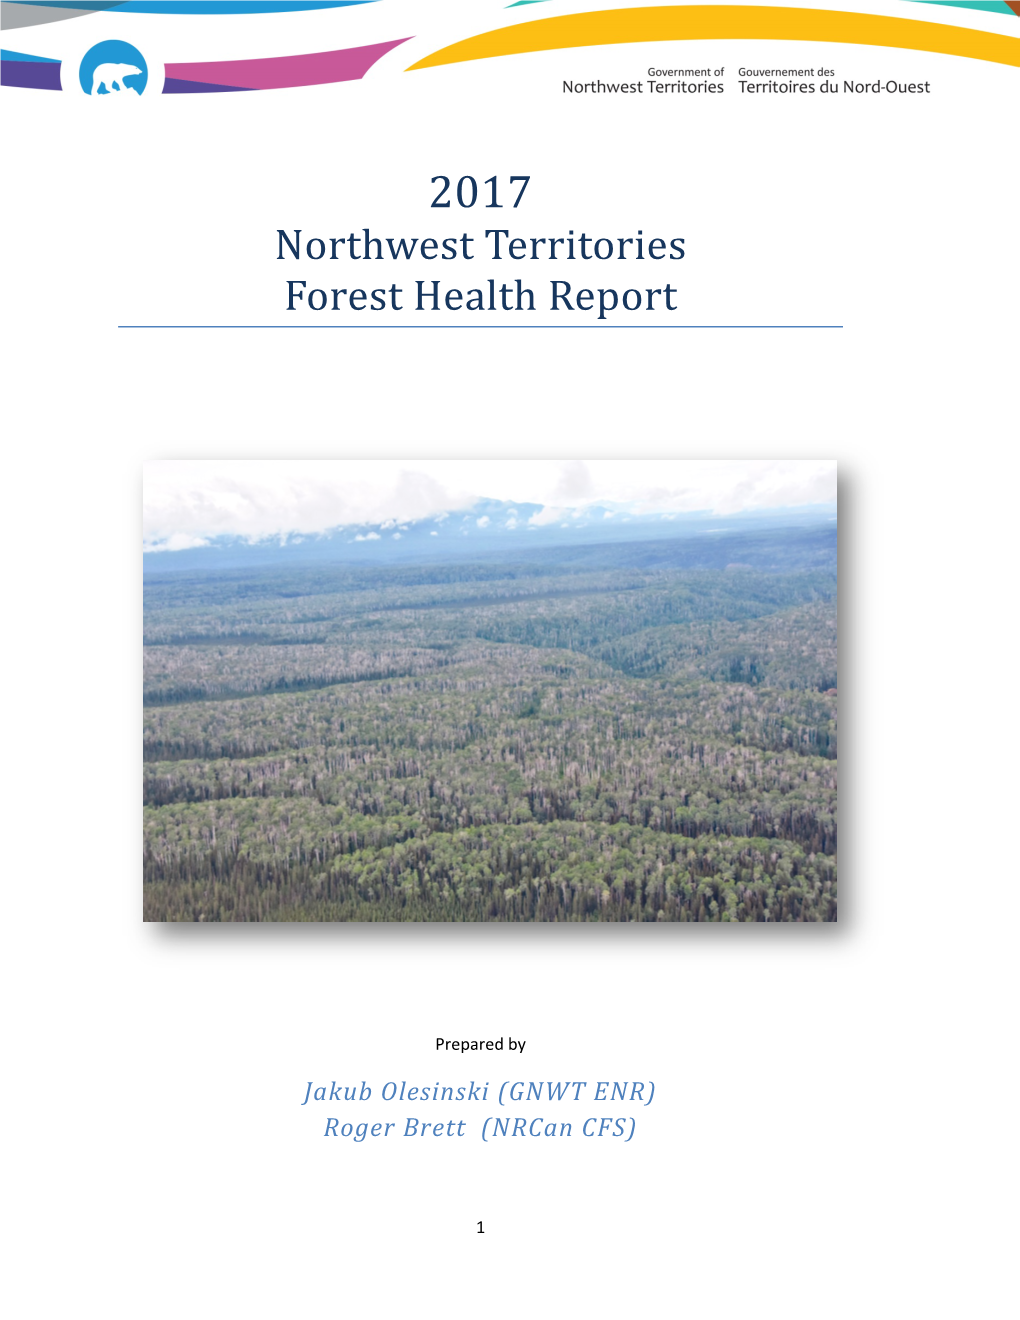 Northwest Territories Forest Health Report